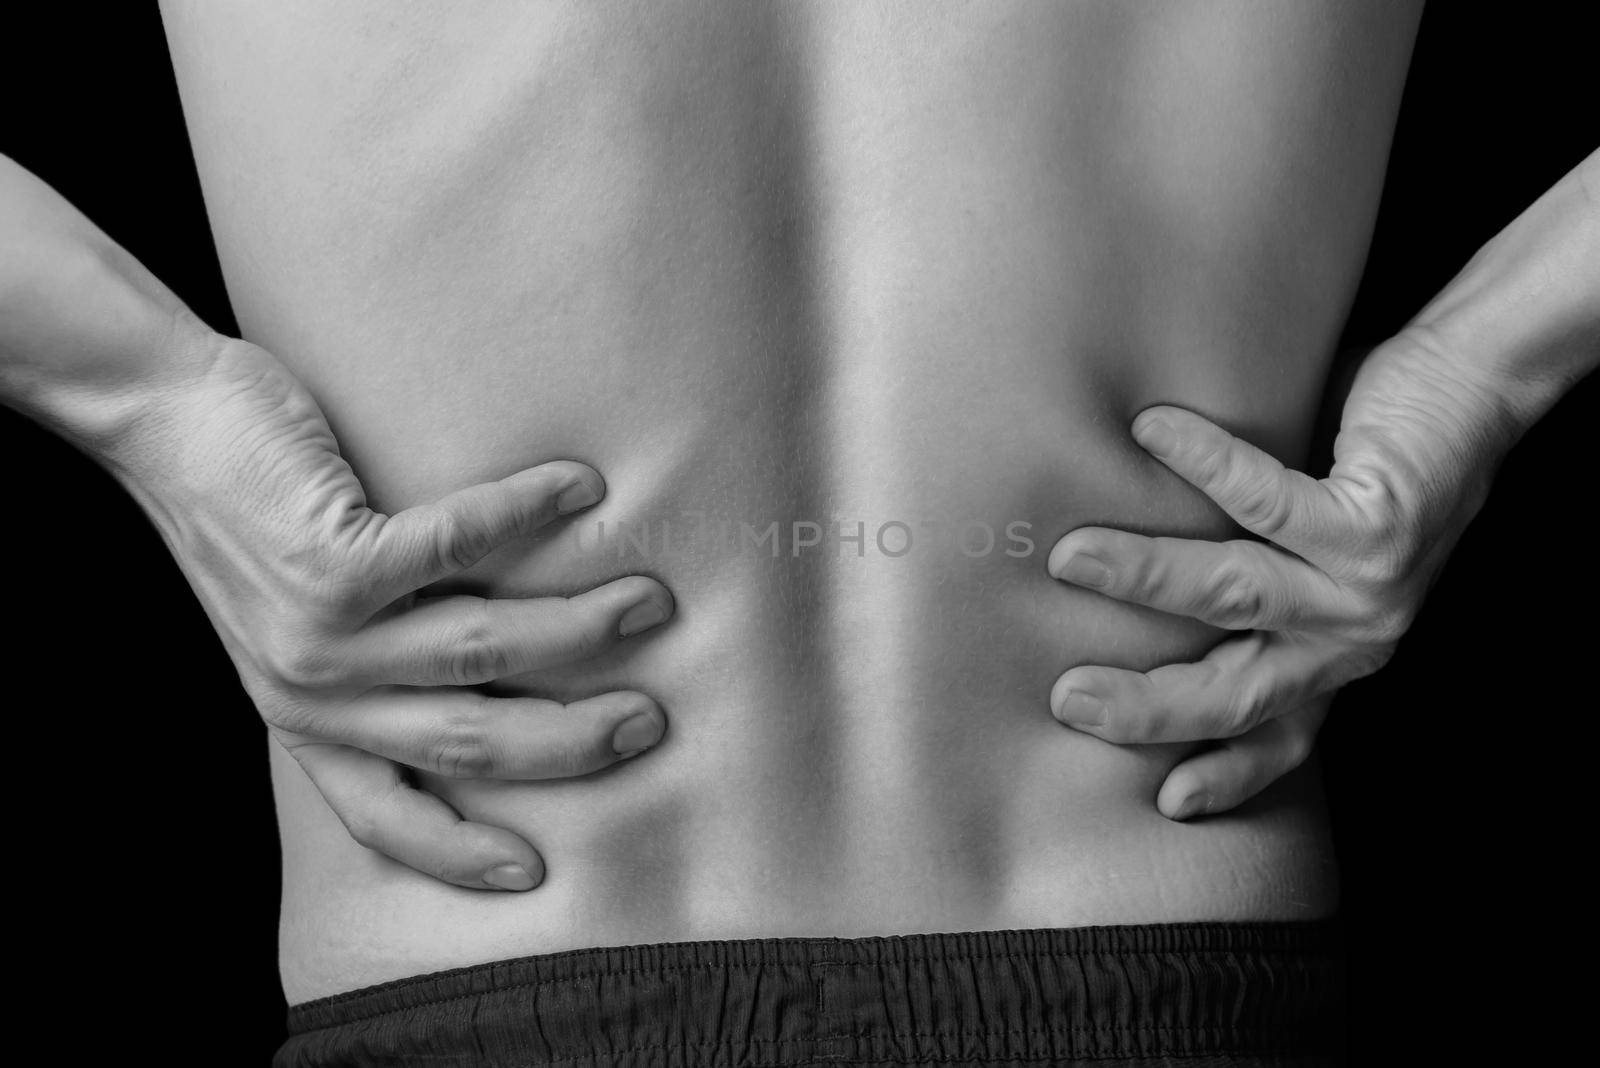 Acute pain in the kidneys by alexAleksei